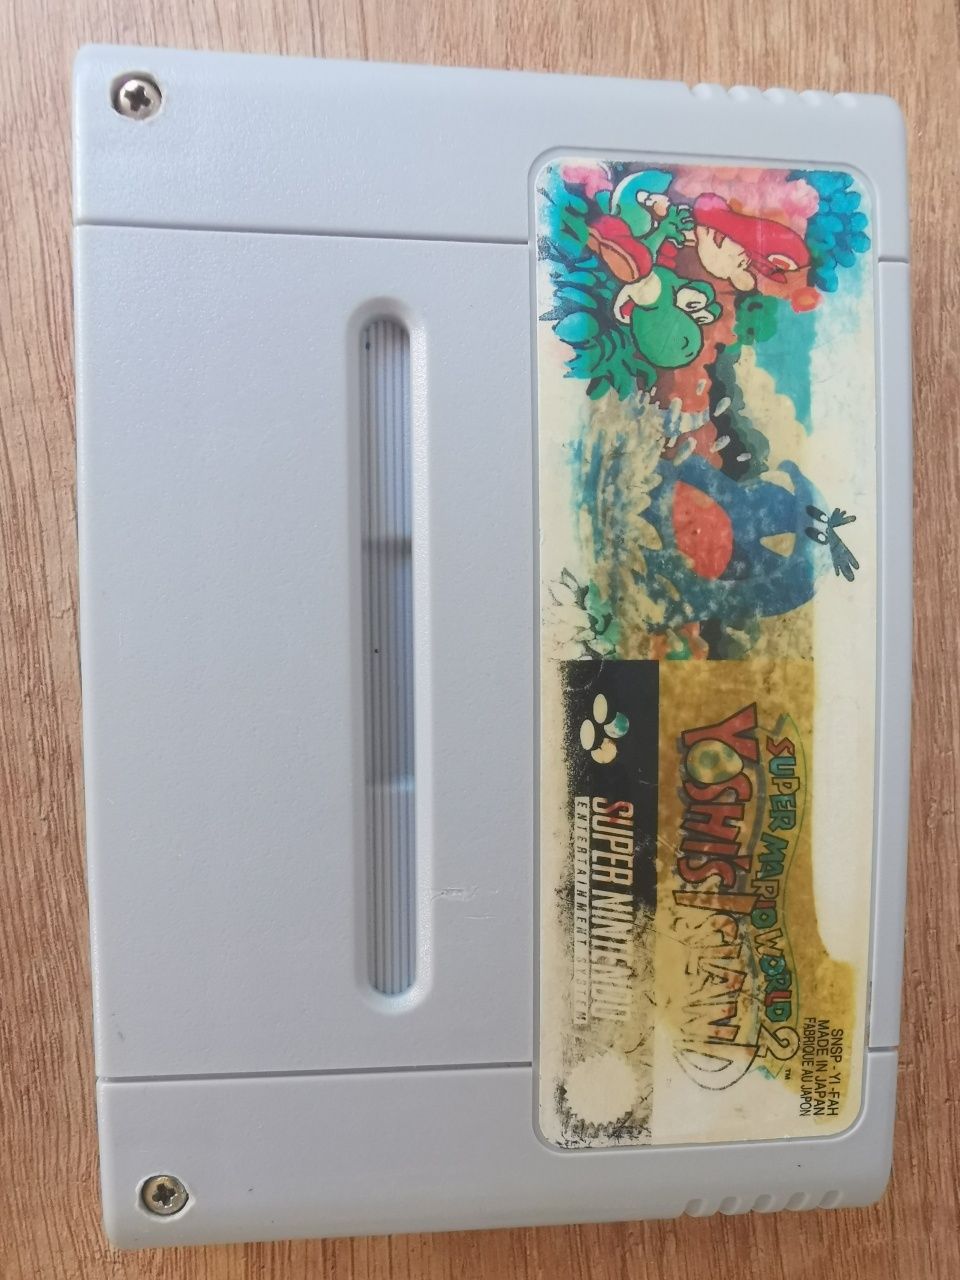 Gry kartridż Super Nintendo SNES 6 sztuk Legend of Zelda